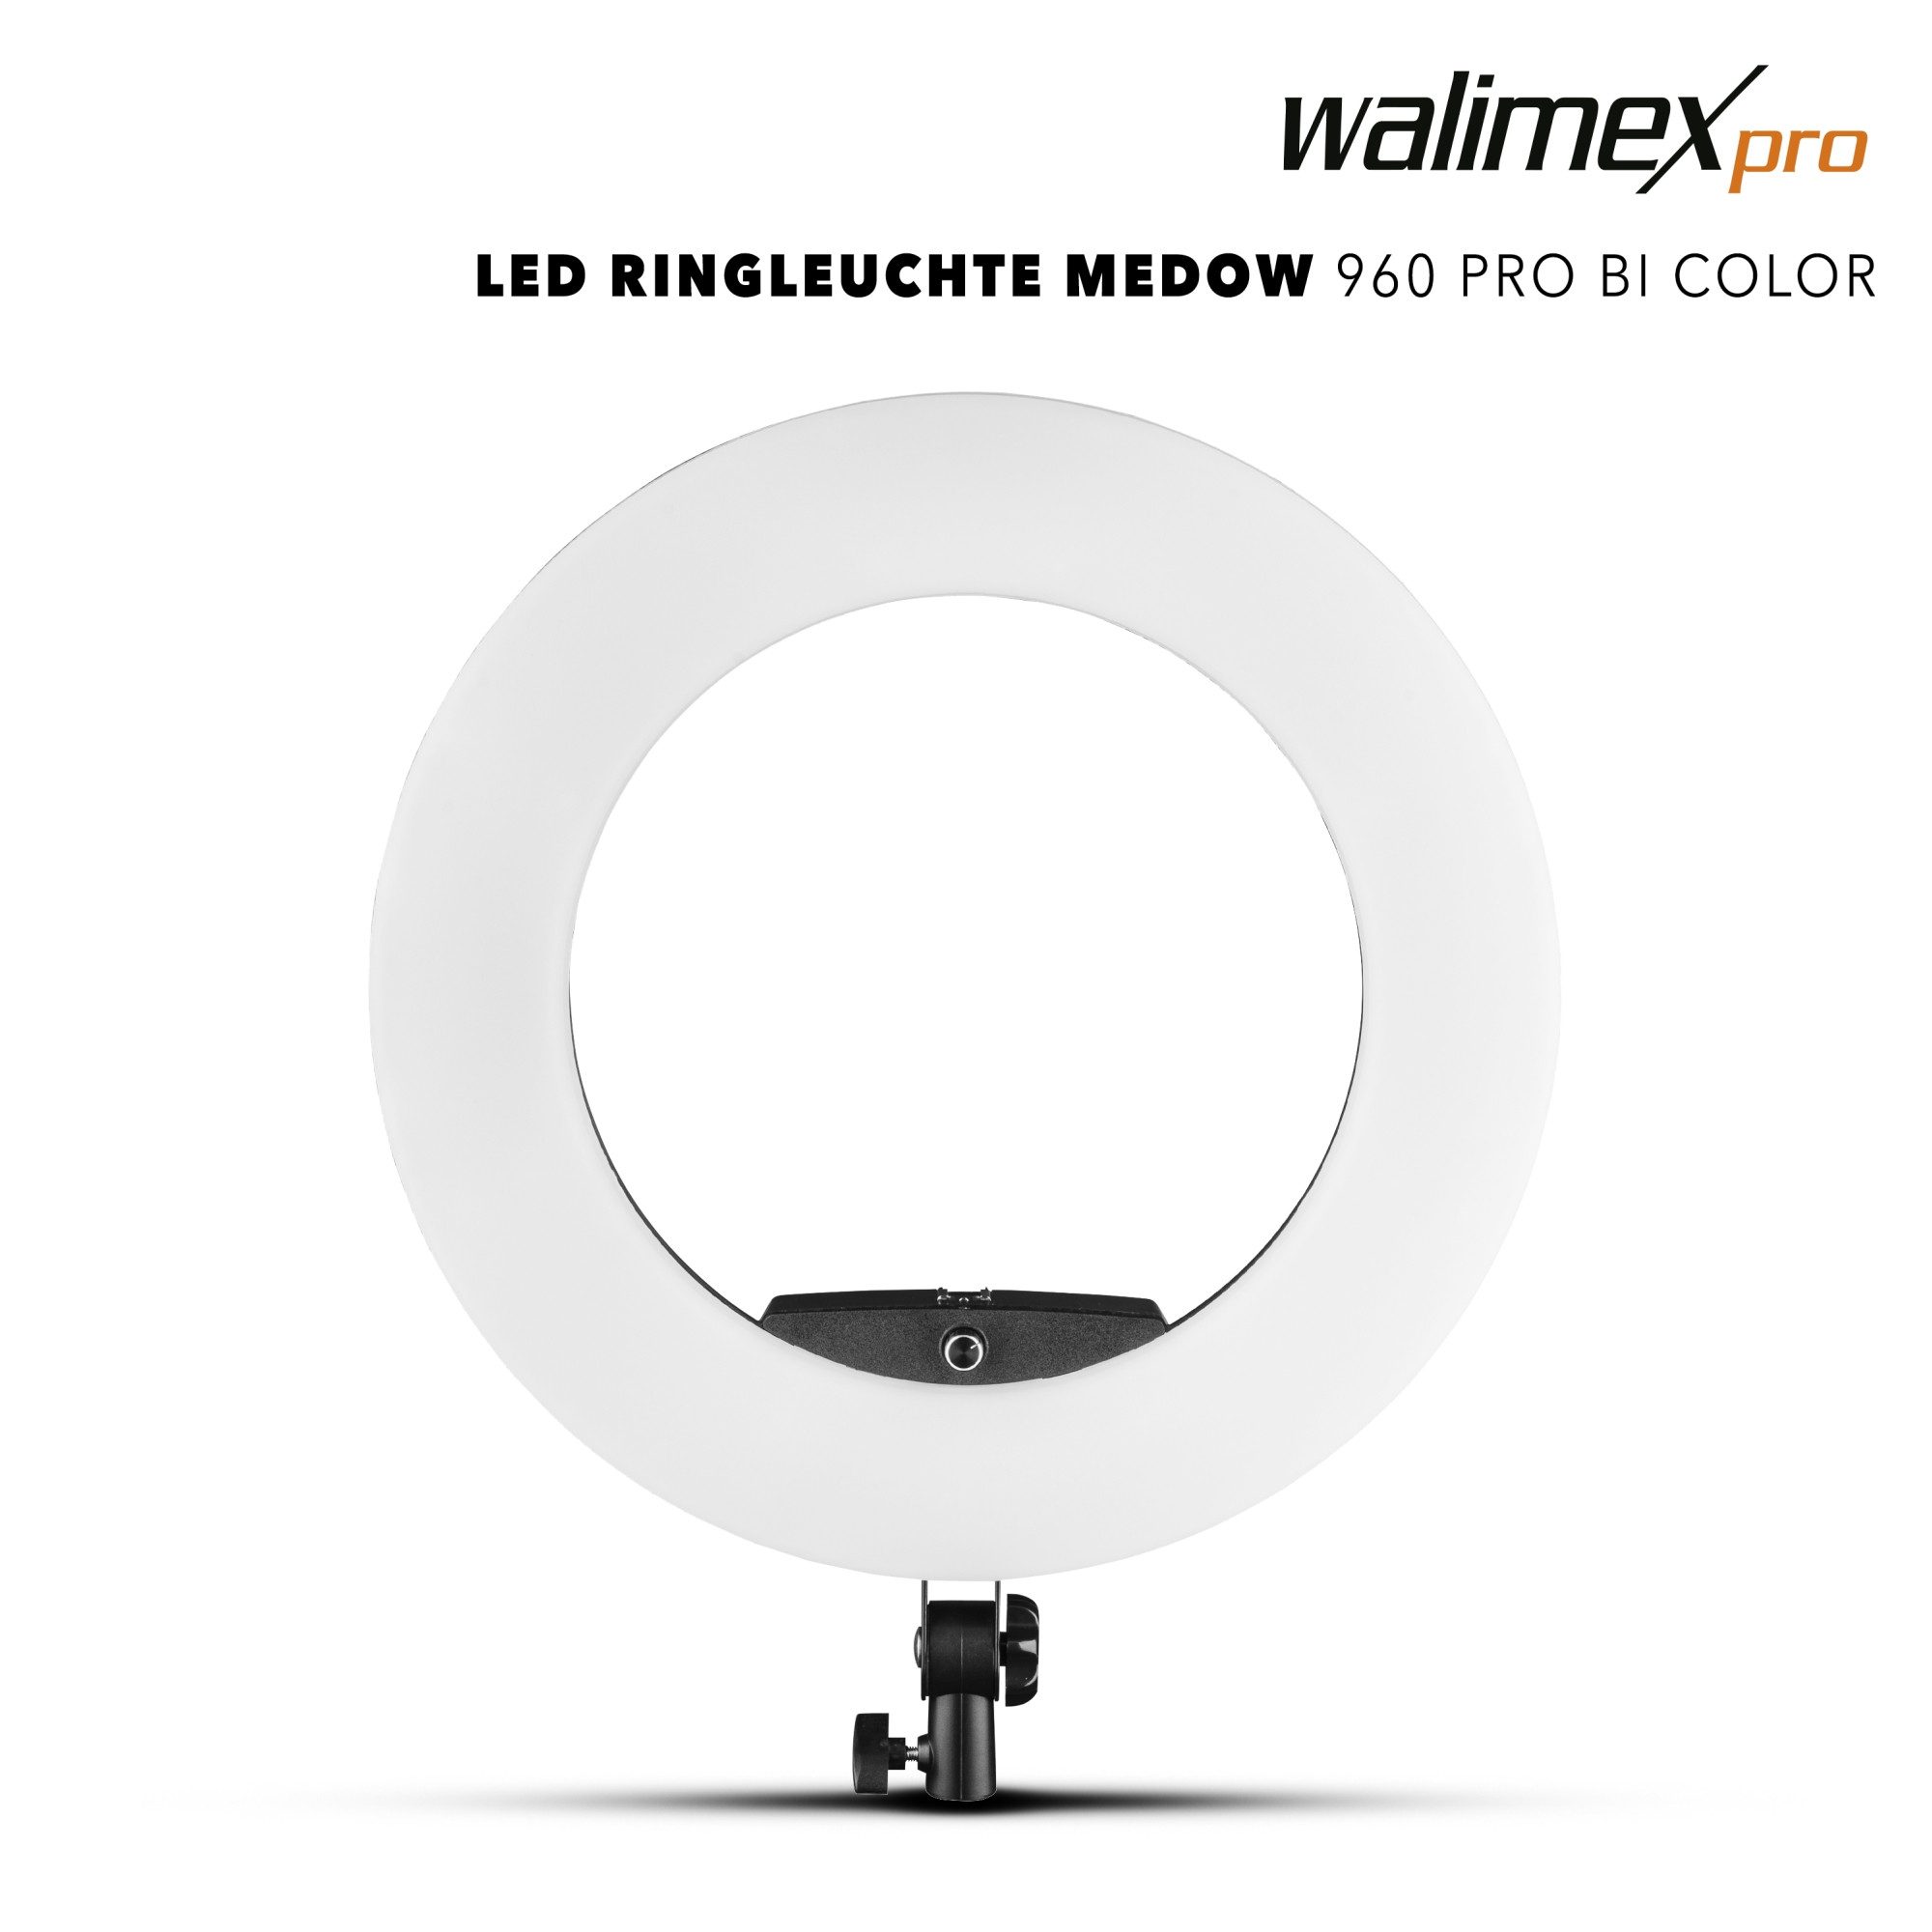 Walimex Pro LED Studiobeleuchtung LED Ringleuchte 960 Medow Pro Bi Color